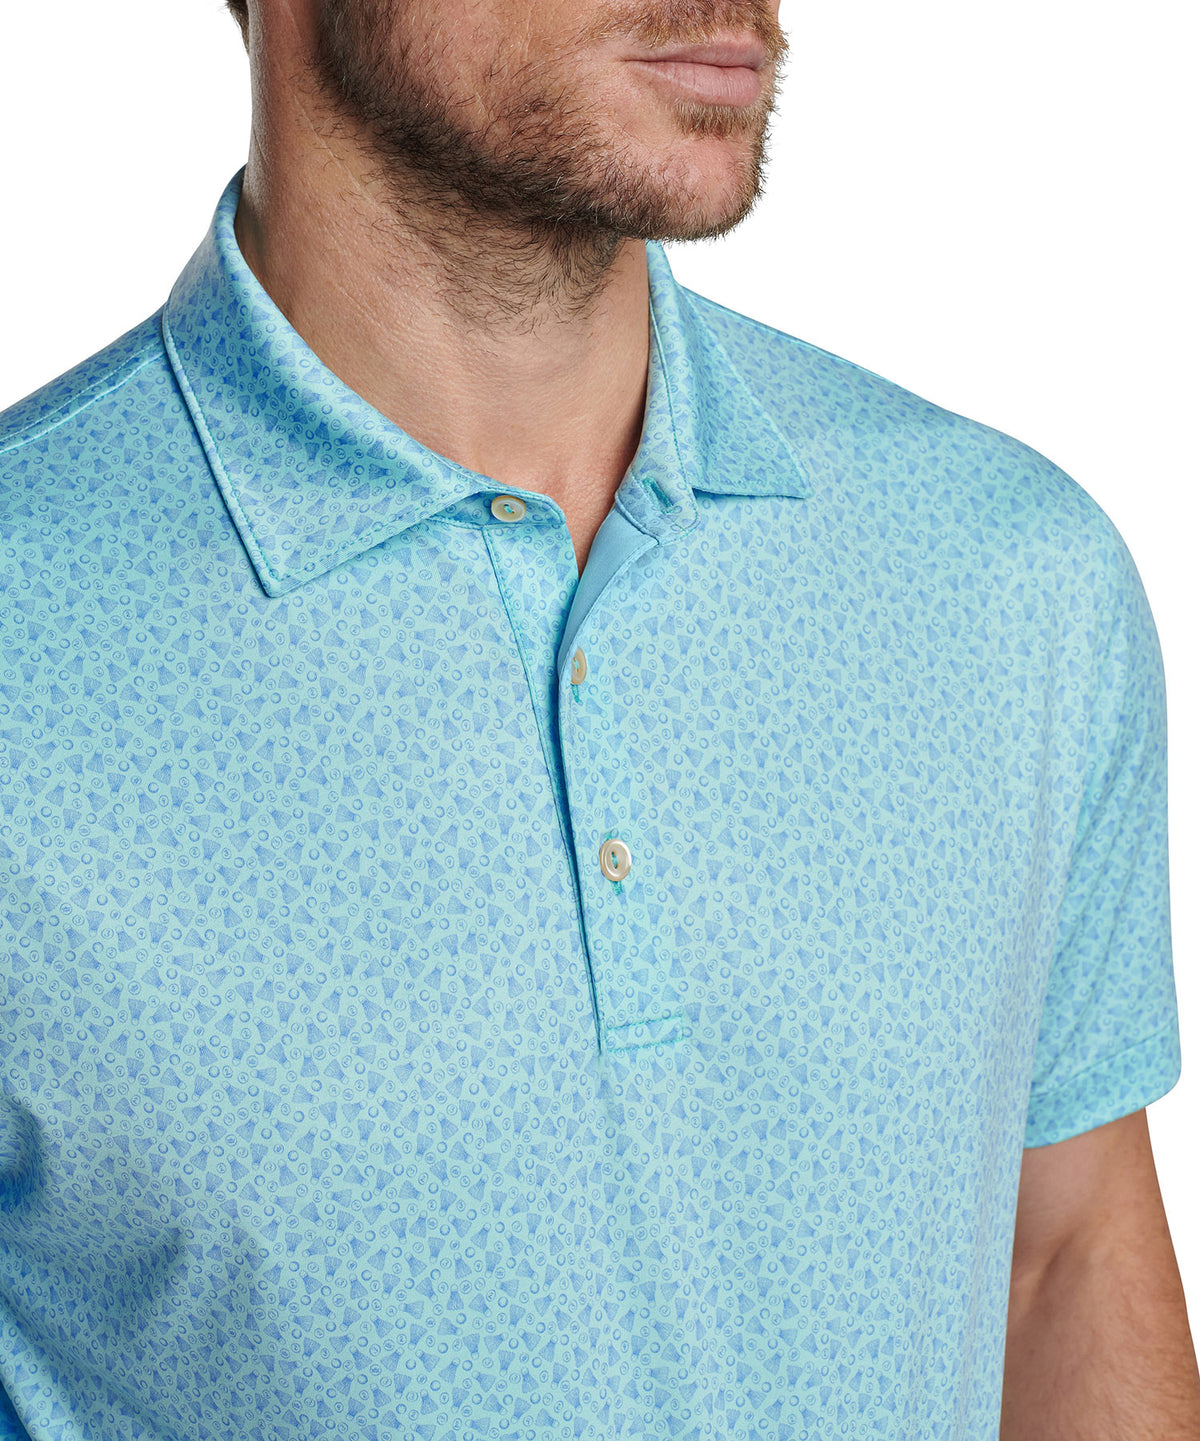 Peter Millar Short Sleeve Birdie Time Print Polo Knit Shirt, Big & Tall